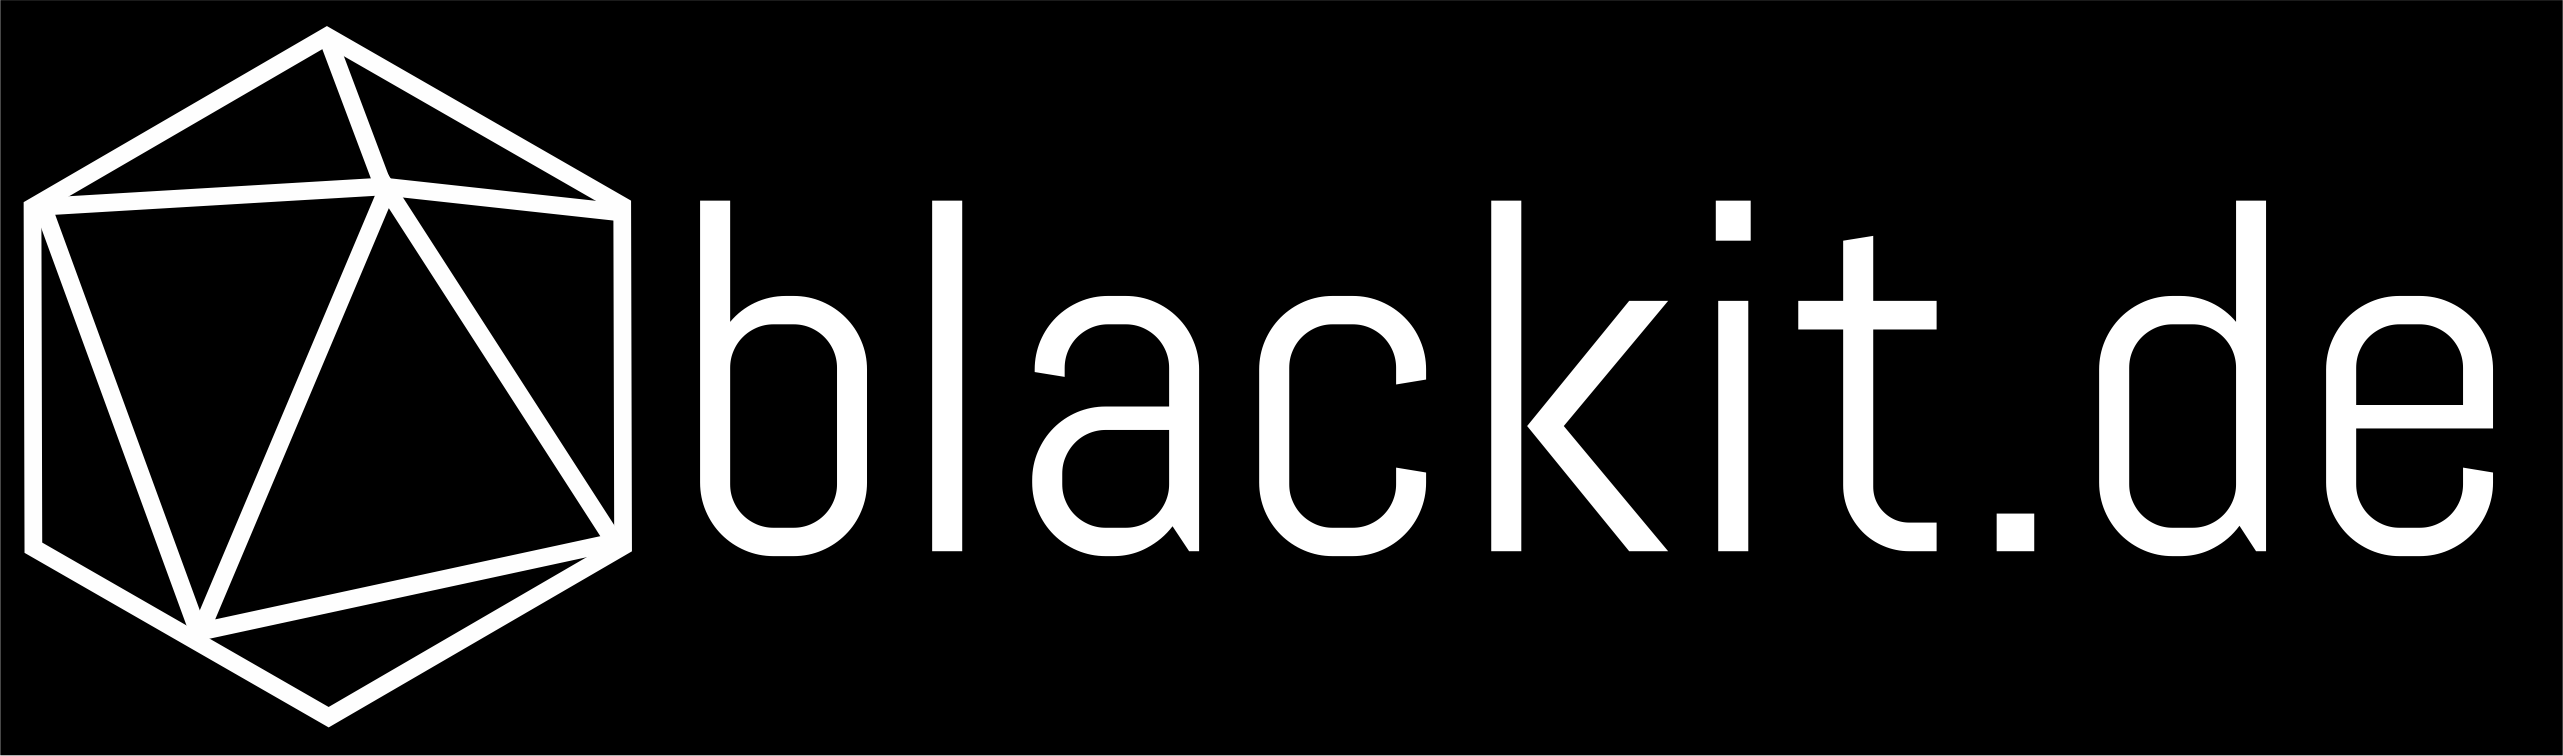 blackit.de